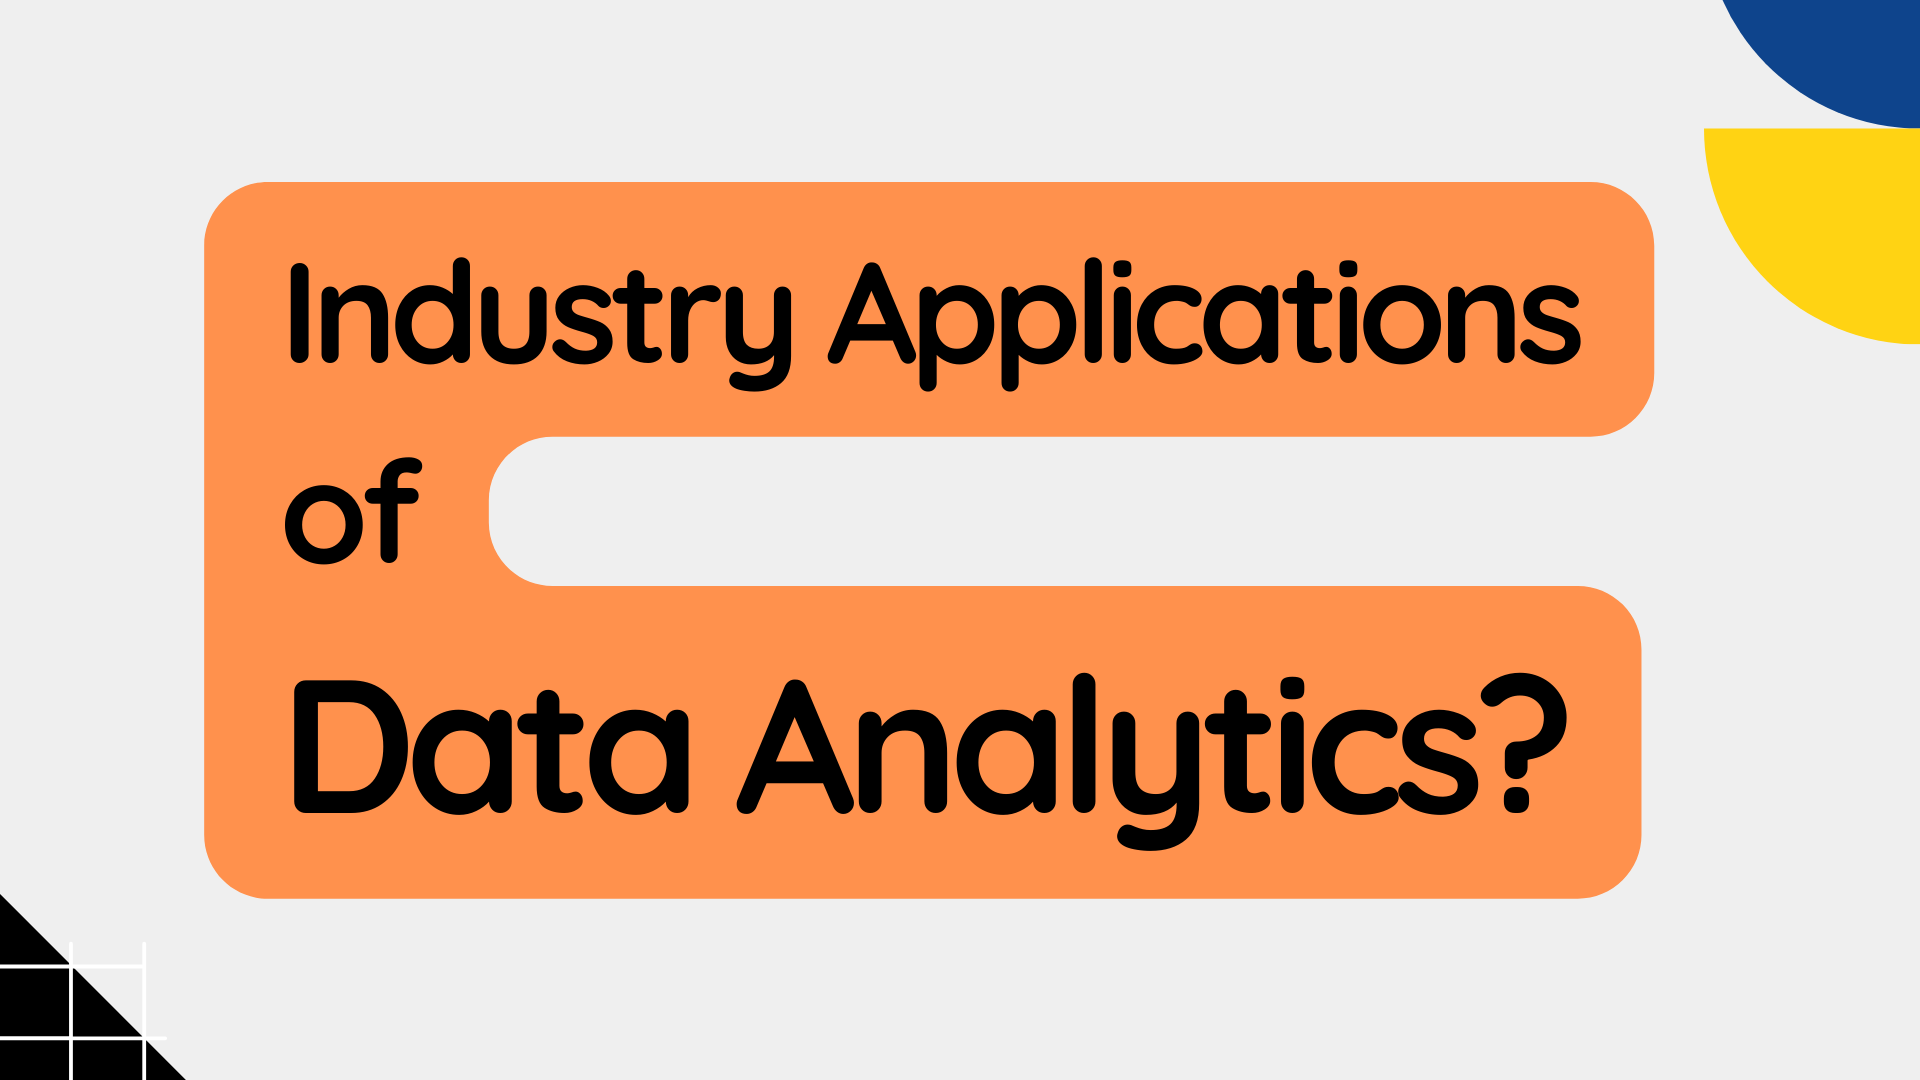 The industry applications of data analytics - NE